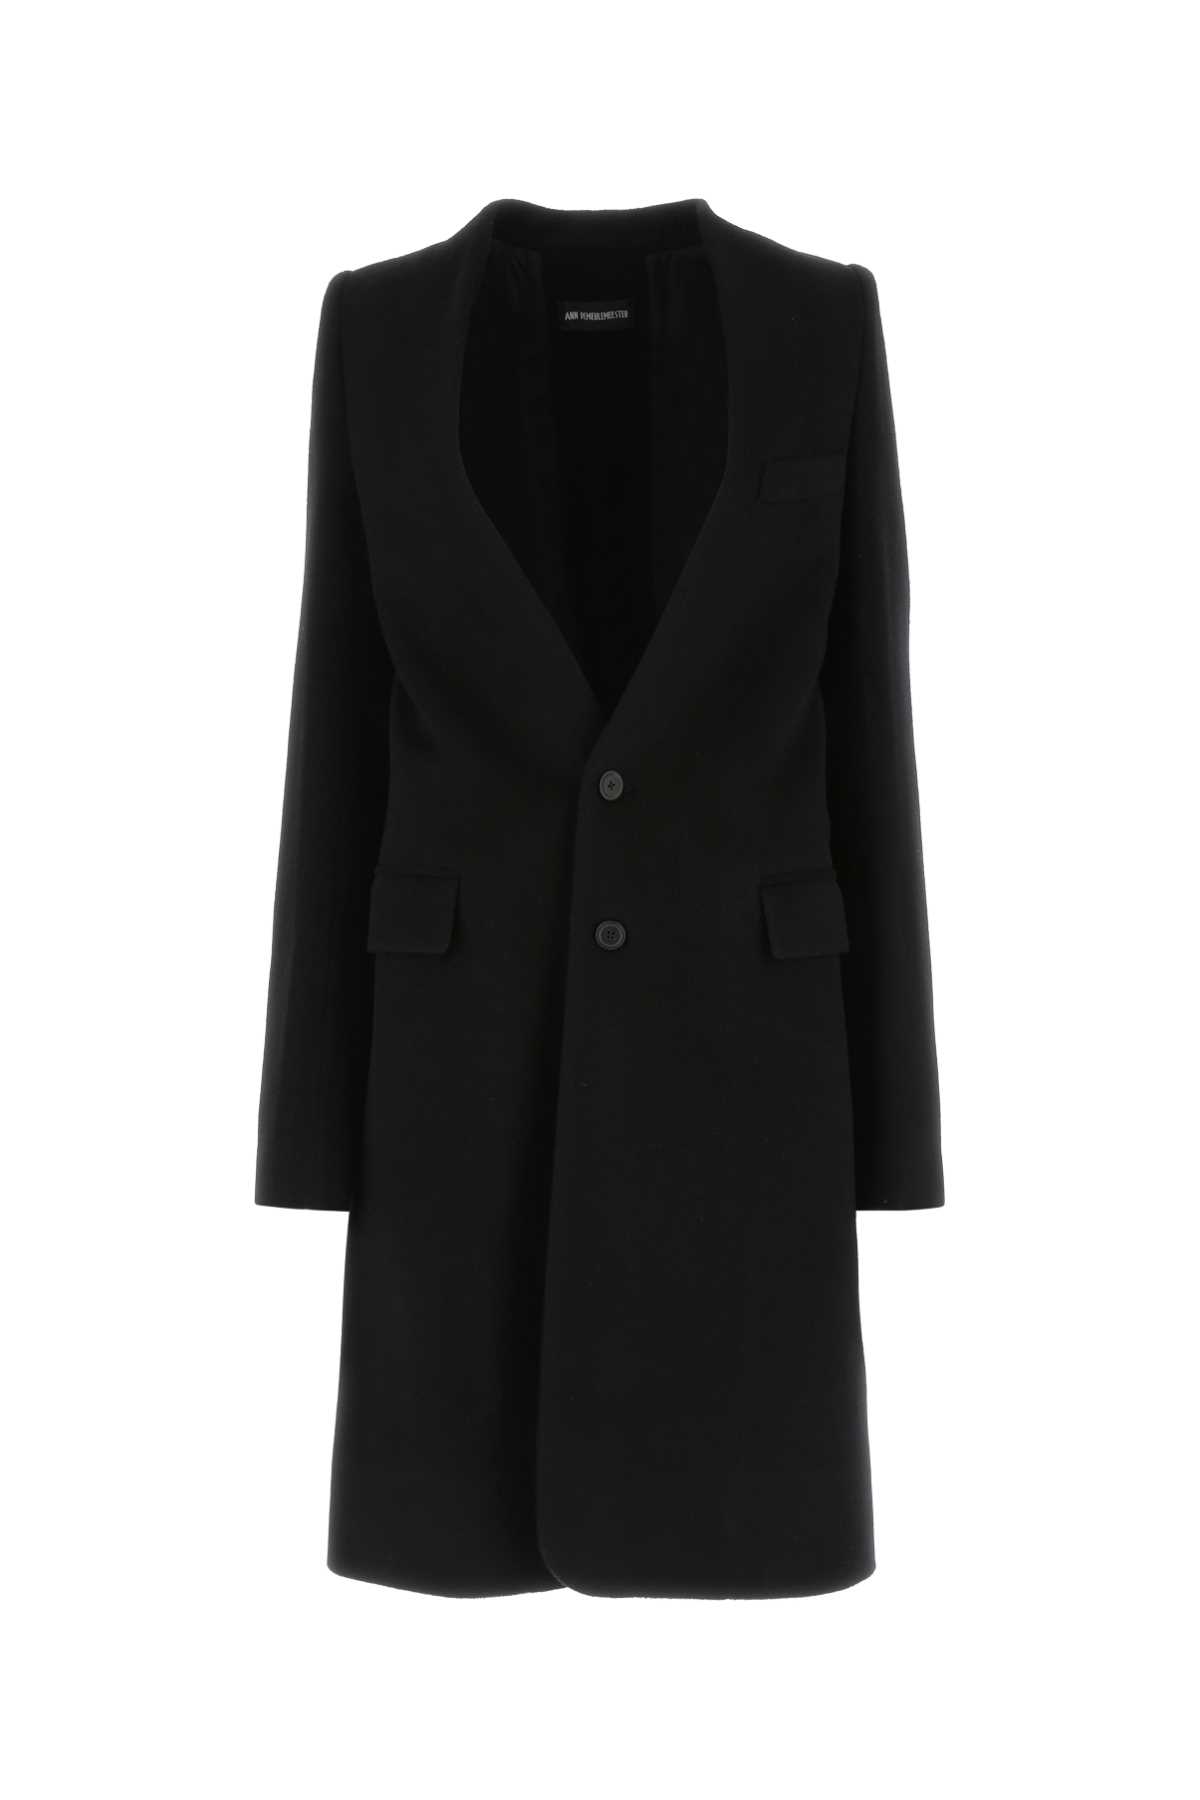 Black Wool Blend Celine Coat